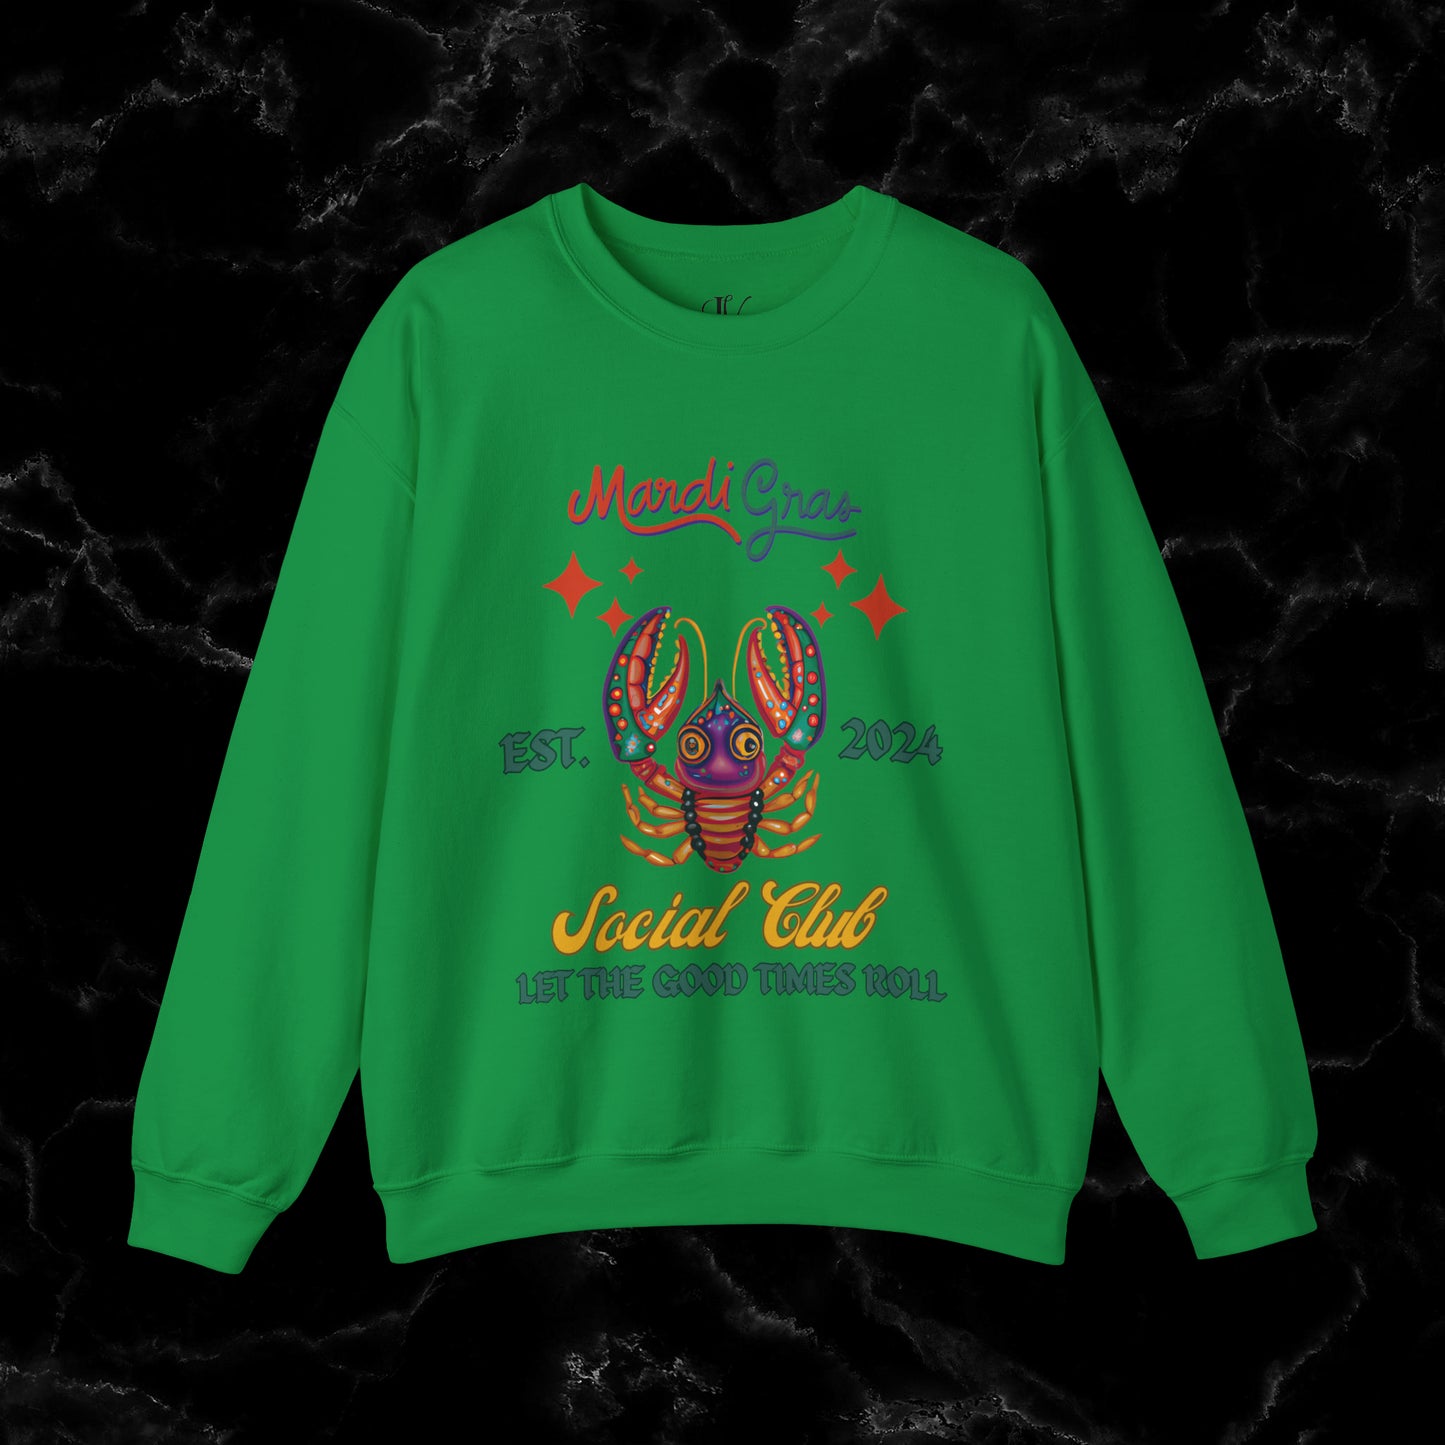 Mardi Gras Sweatshirt Women - NOLA Luxury Bachelorette Sweater, Unique Fat Tuesday Shirt, Louisiana Girls Trip Sweater, Mardi Gras Social Club Style Sweatshirt S Irish Green 